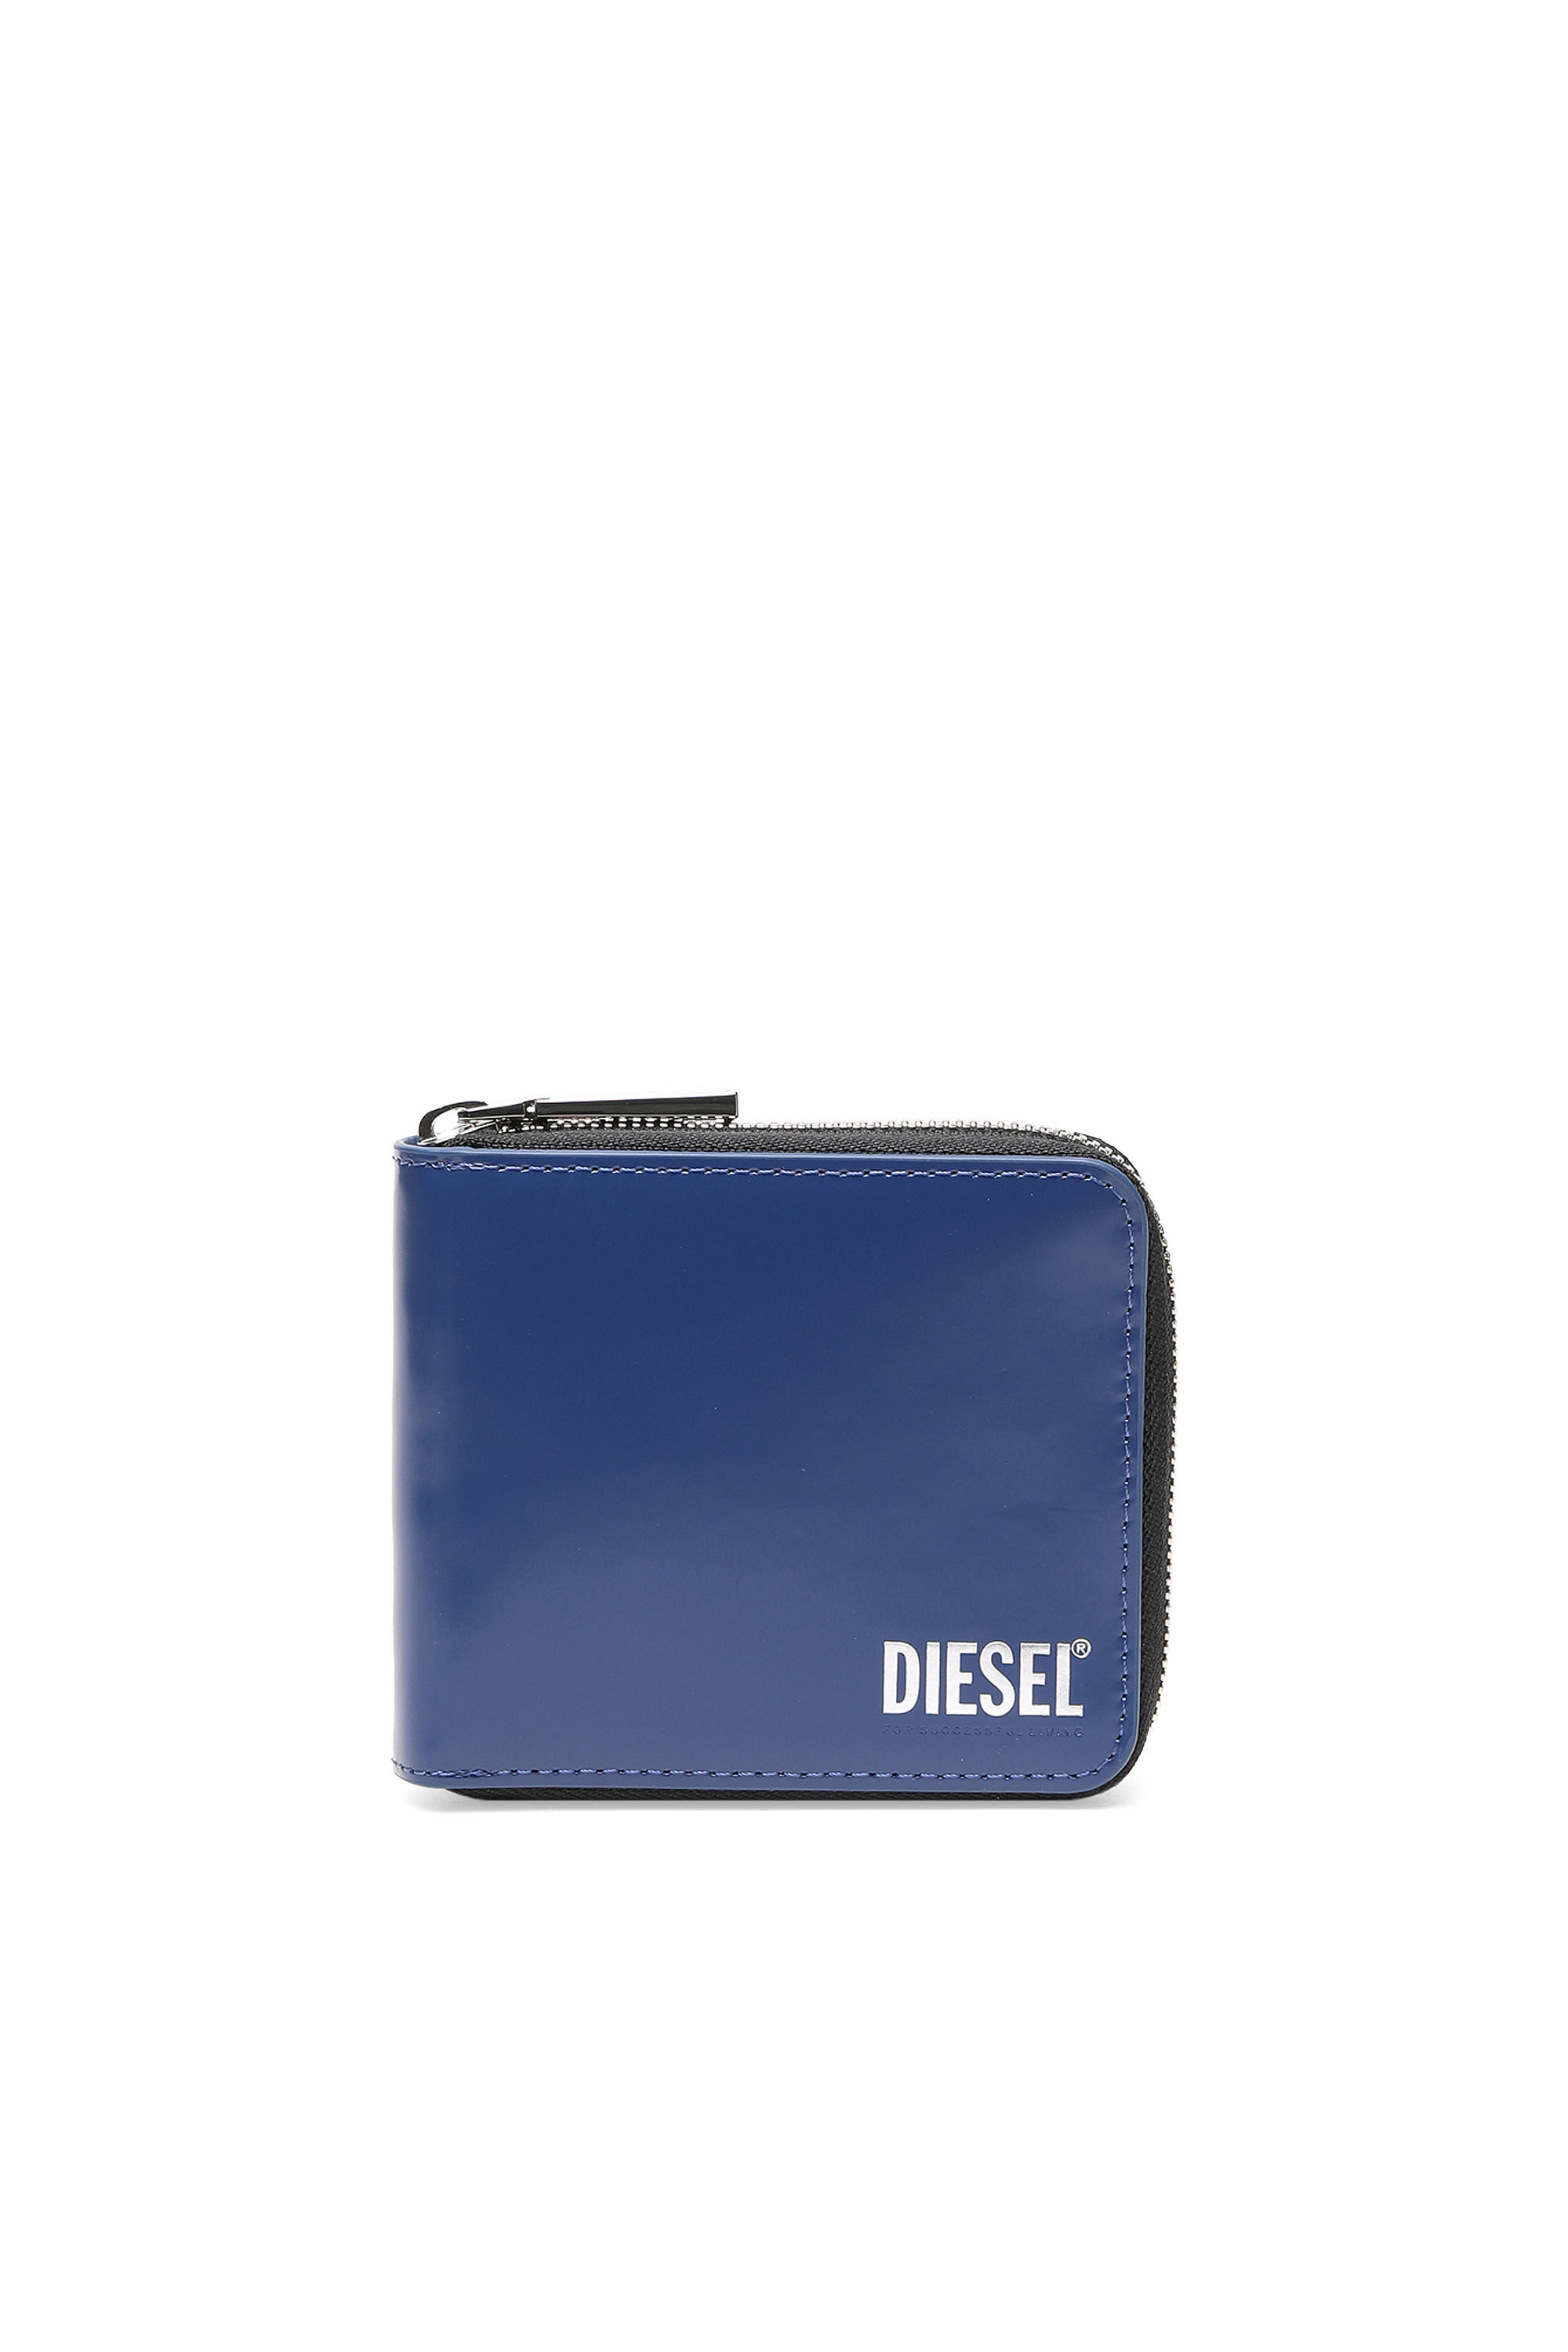 Diesel - HIRESH XS ZIPPI, Blue - Image 1